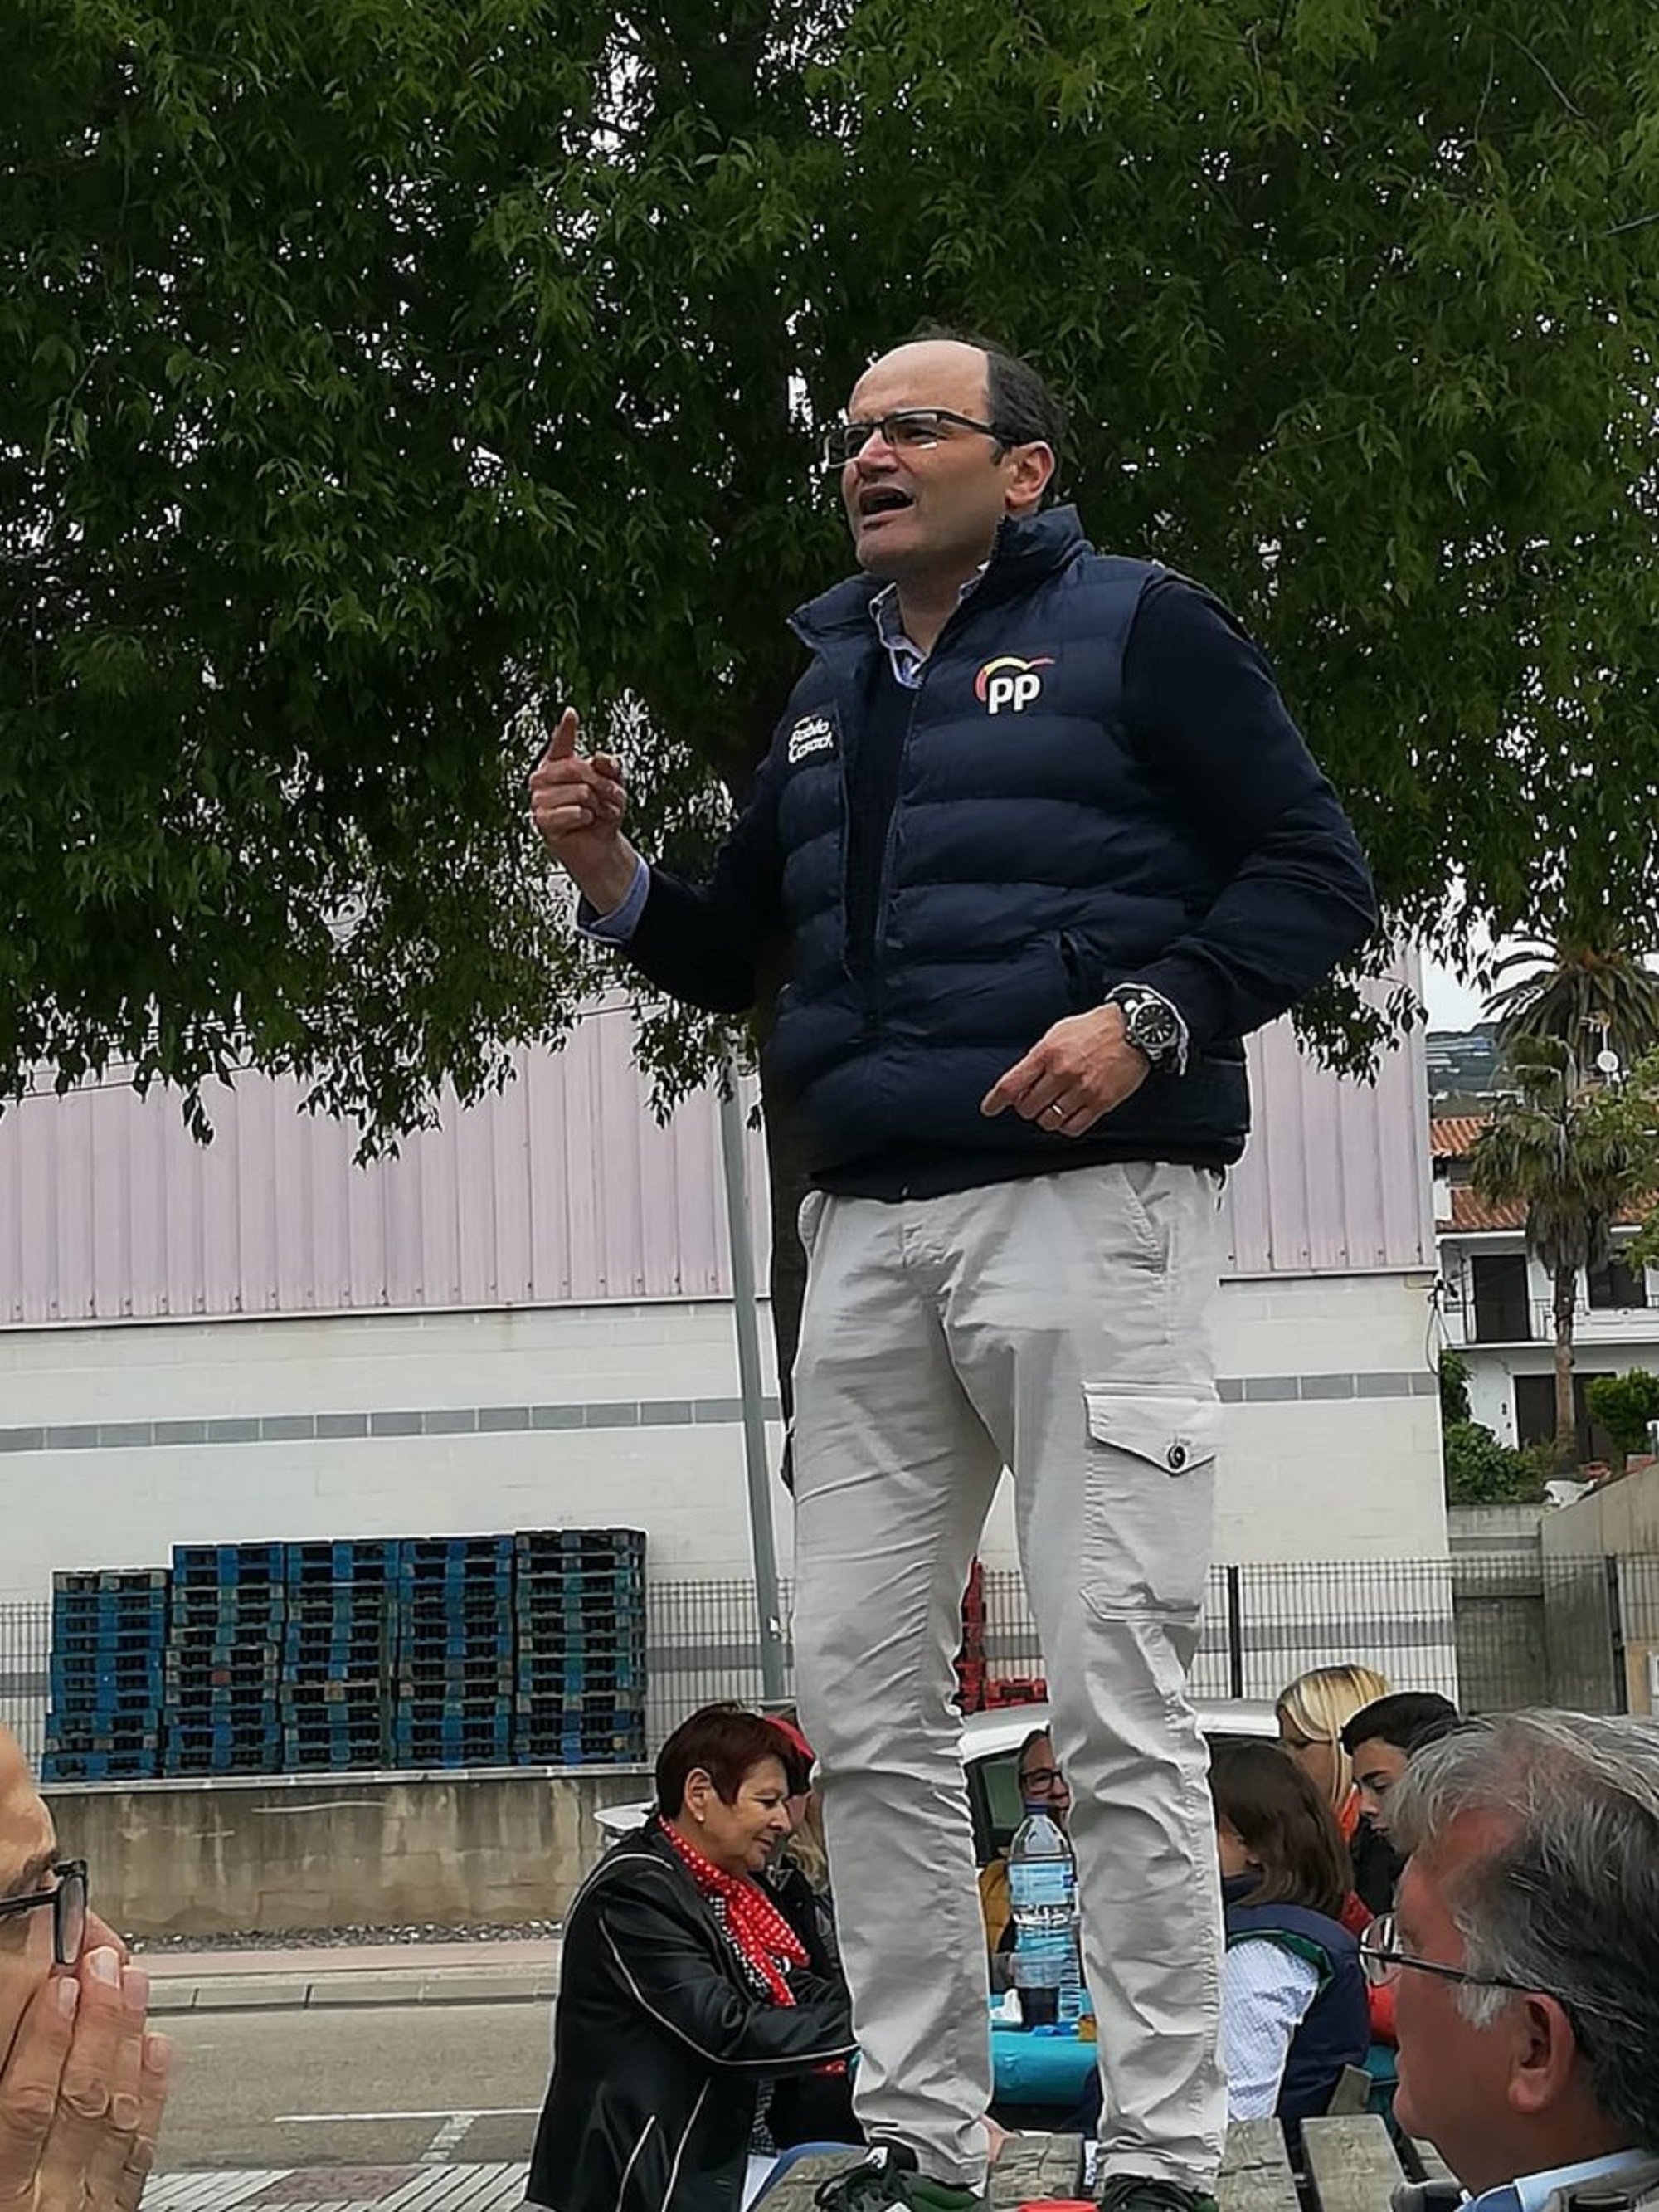 La impresentable amenaza a Torra del cabeza de lista del PP en Girona